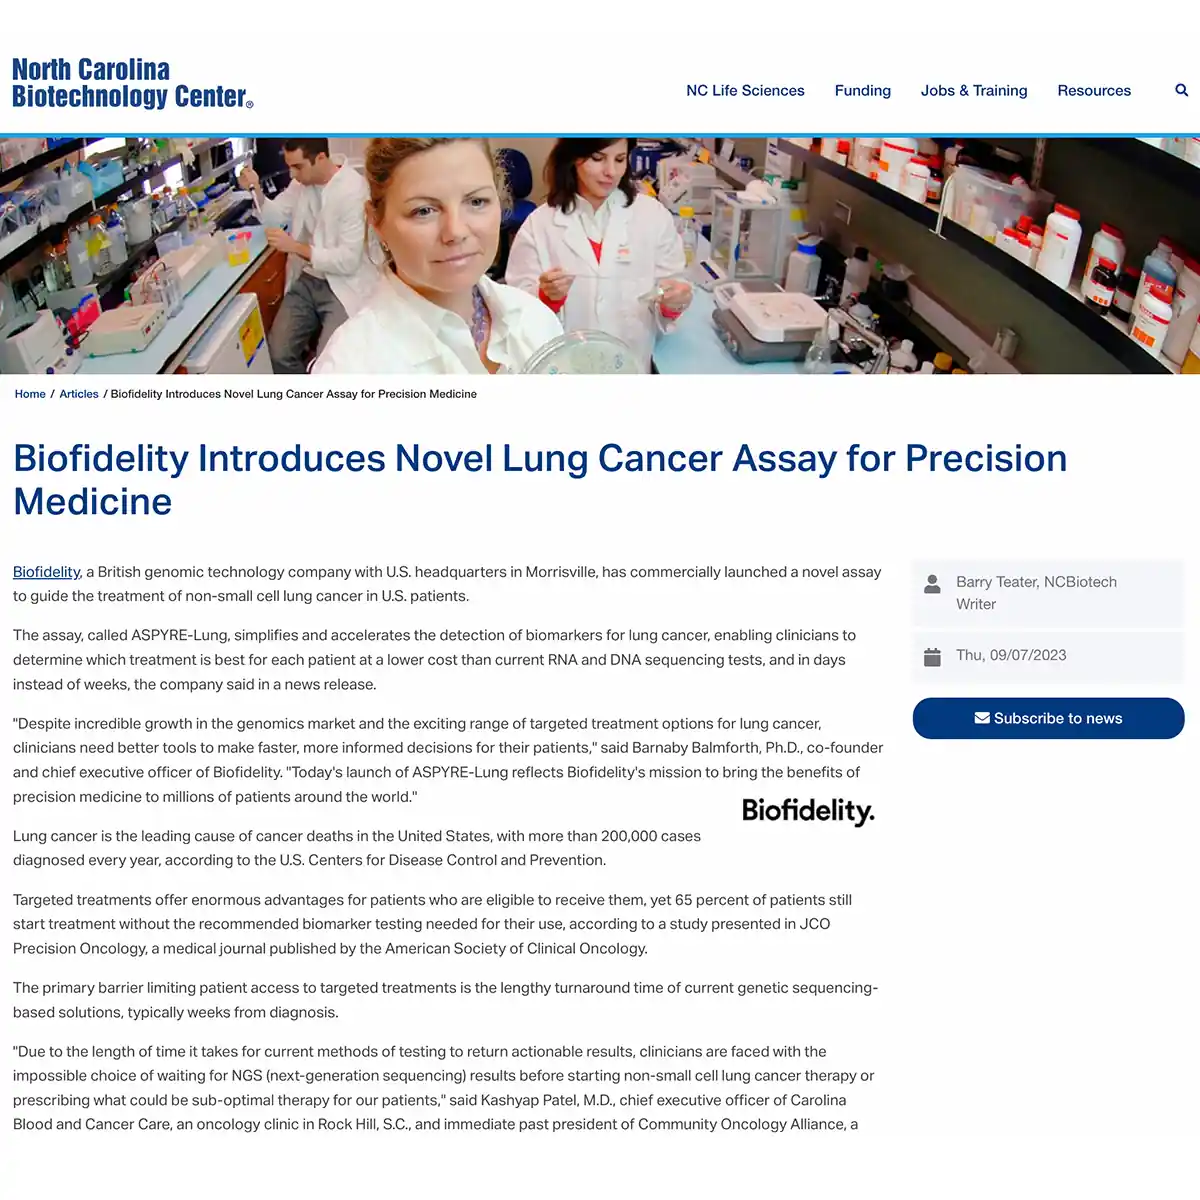 Biofidelity Introduces Novel Lung Cancer Assay for Precision Medicine